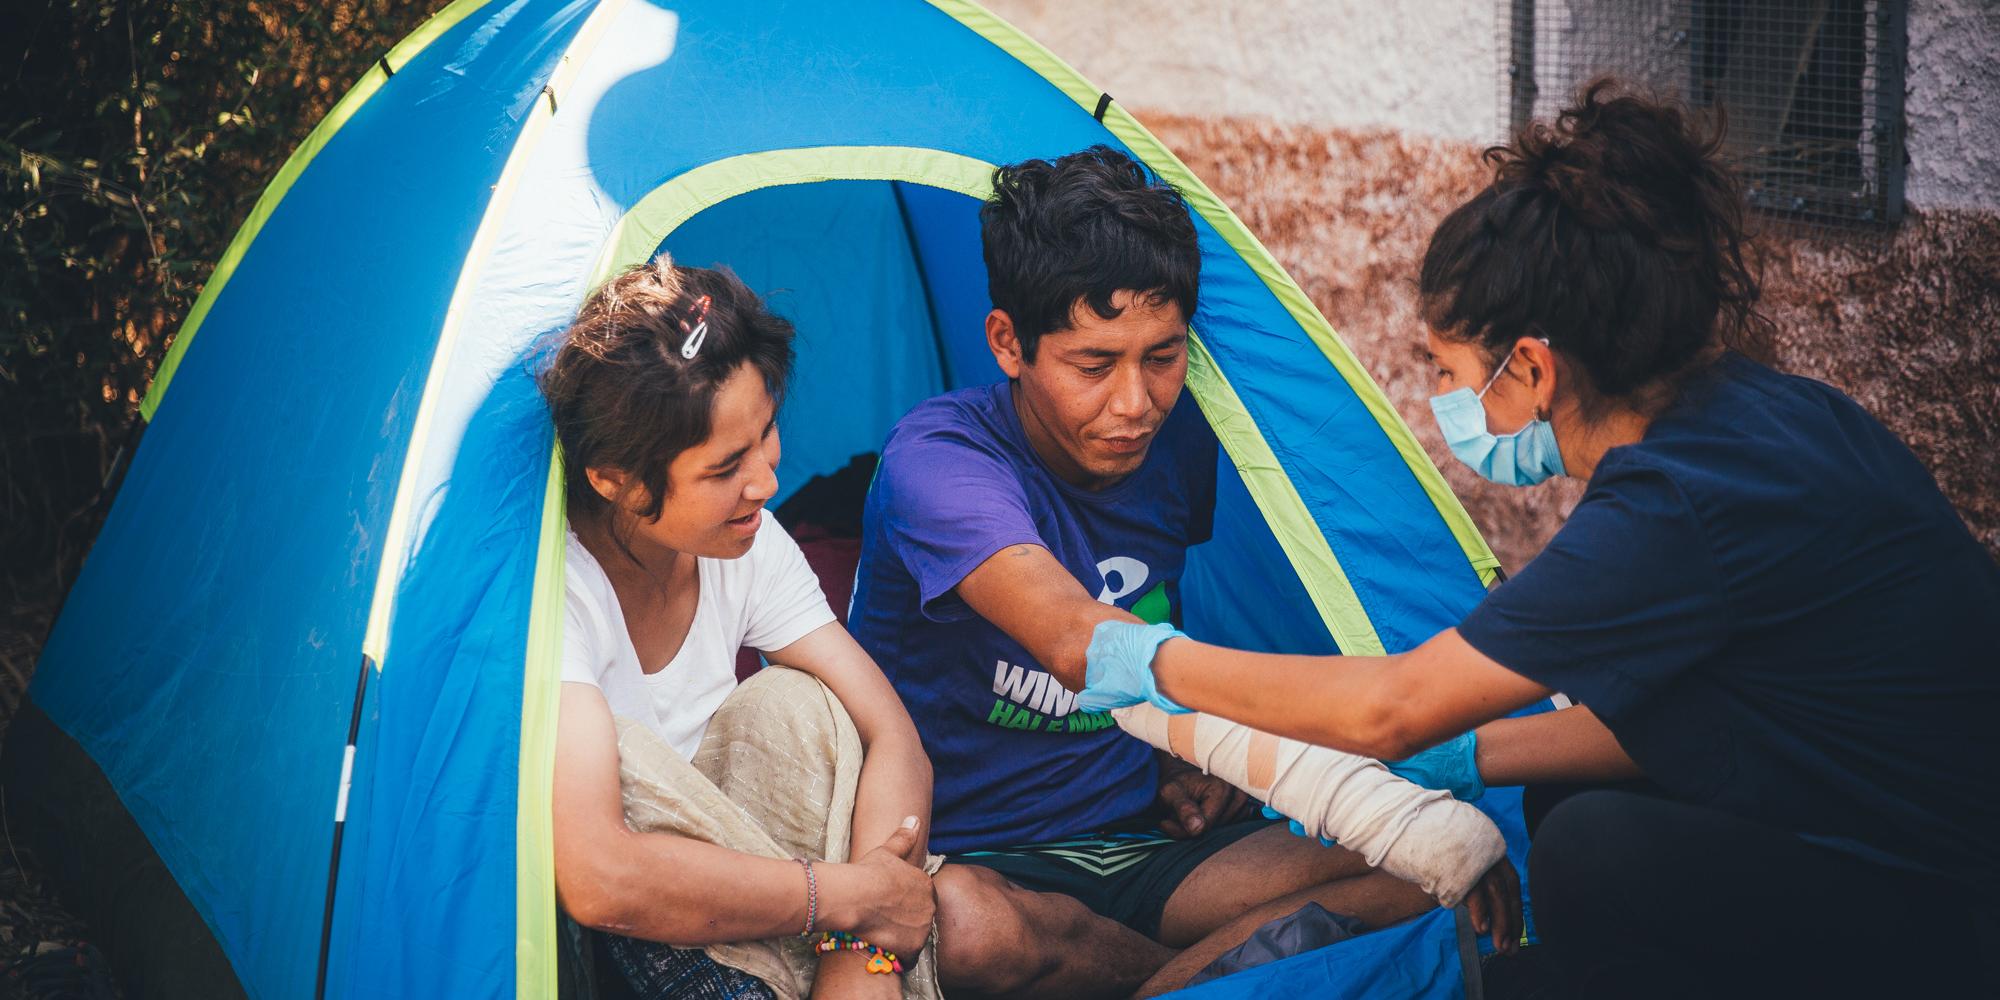 Eindrücke aus dem Flüchlingscamp Moria. Foto: Caritas international